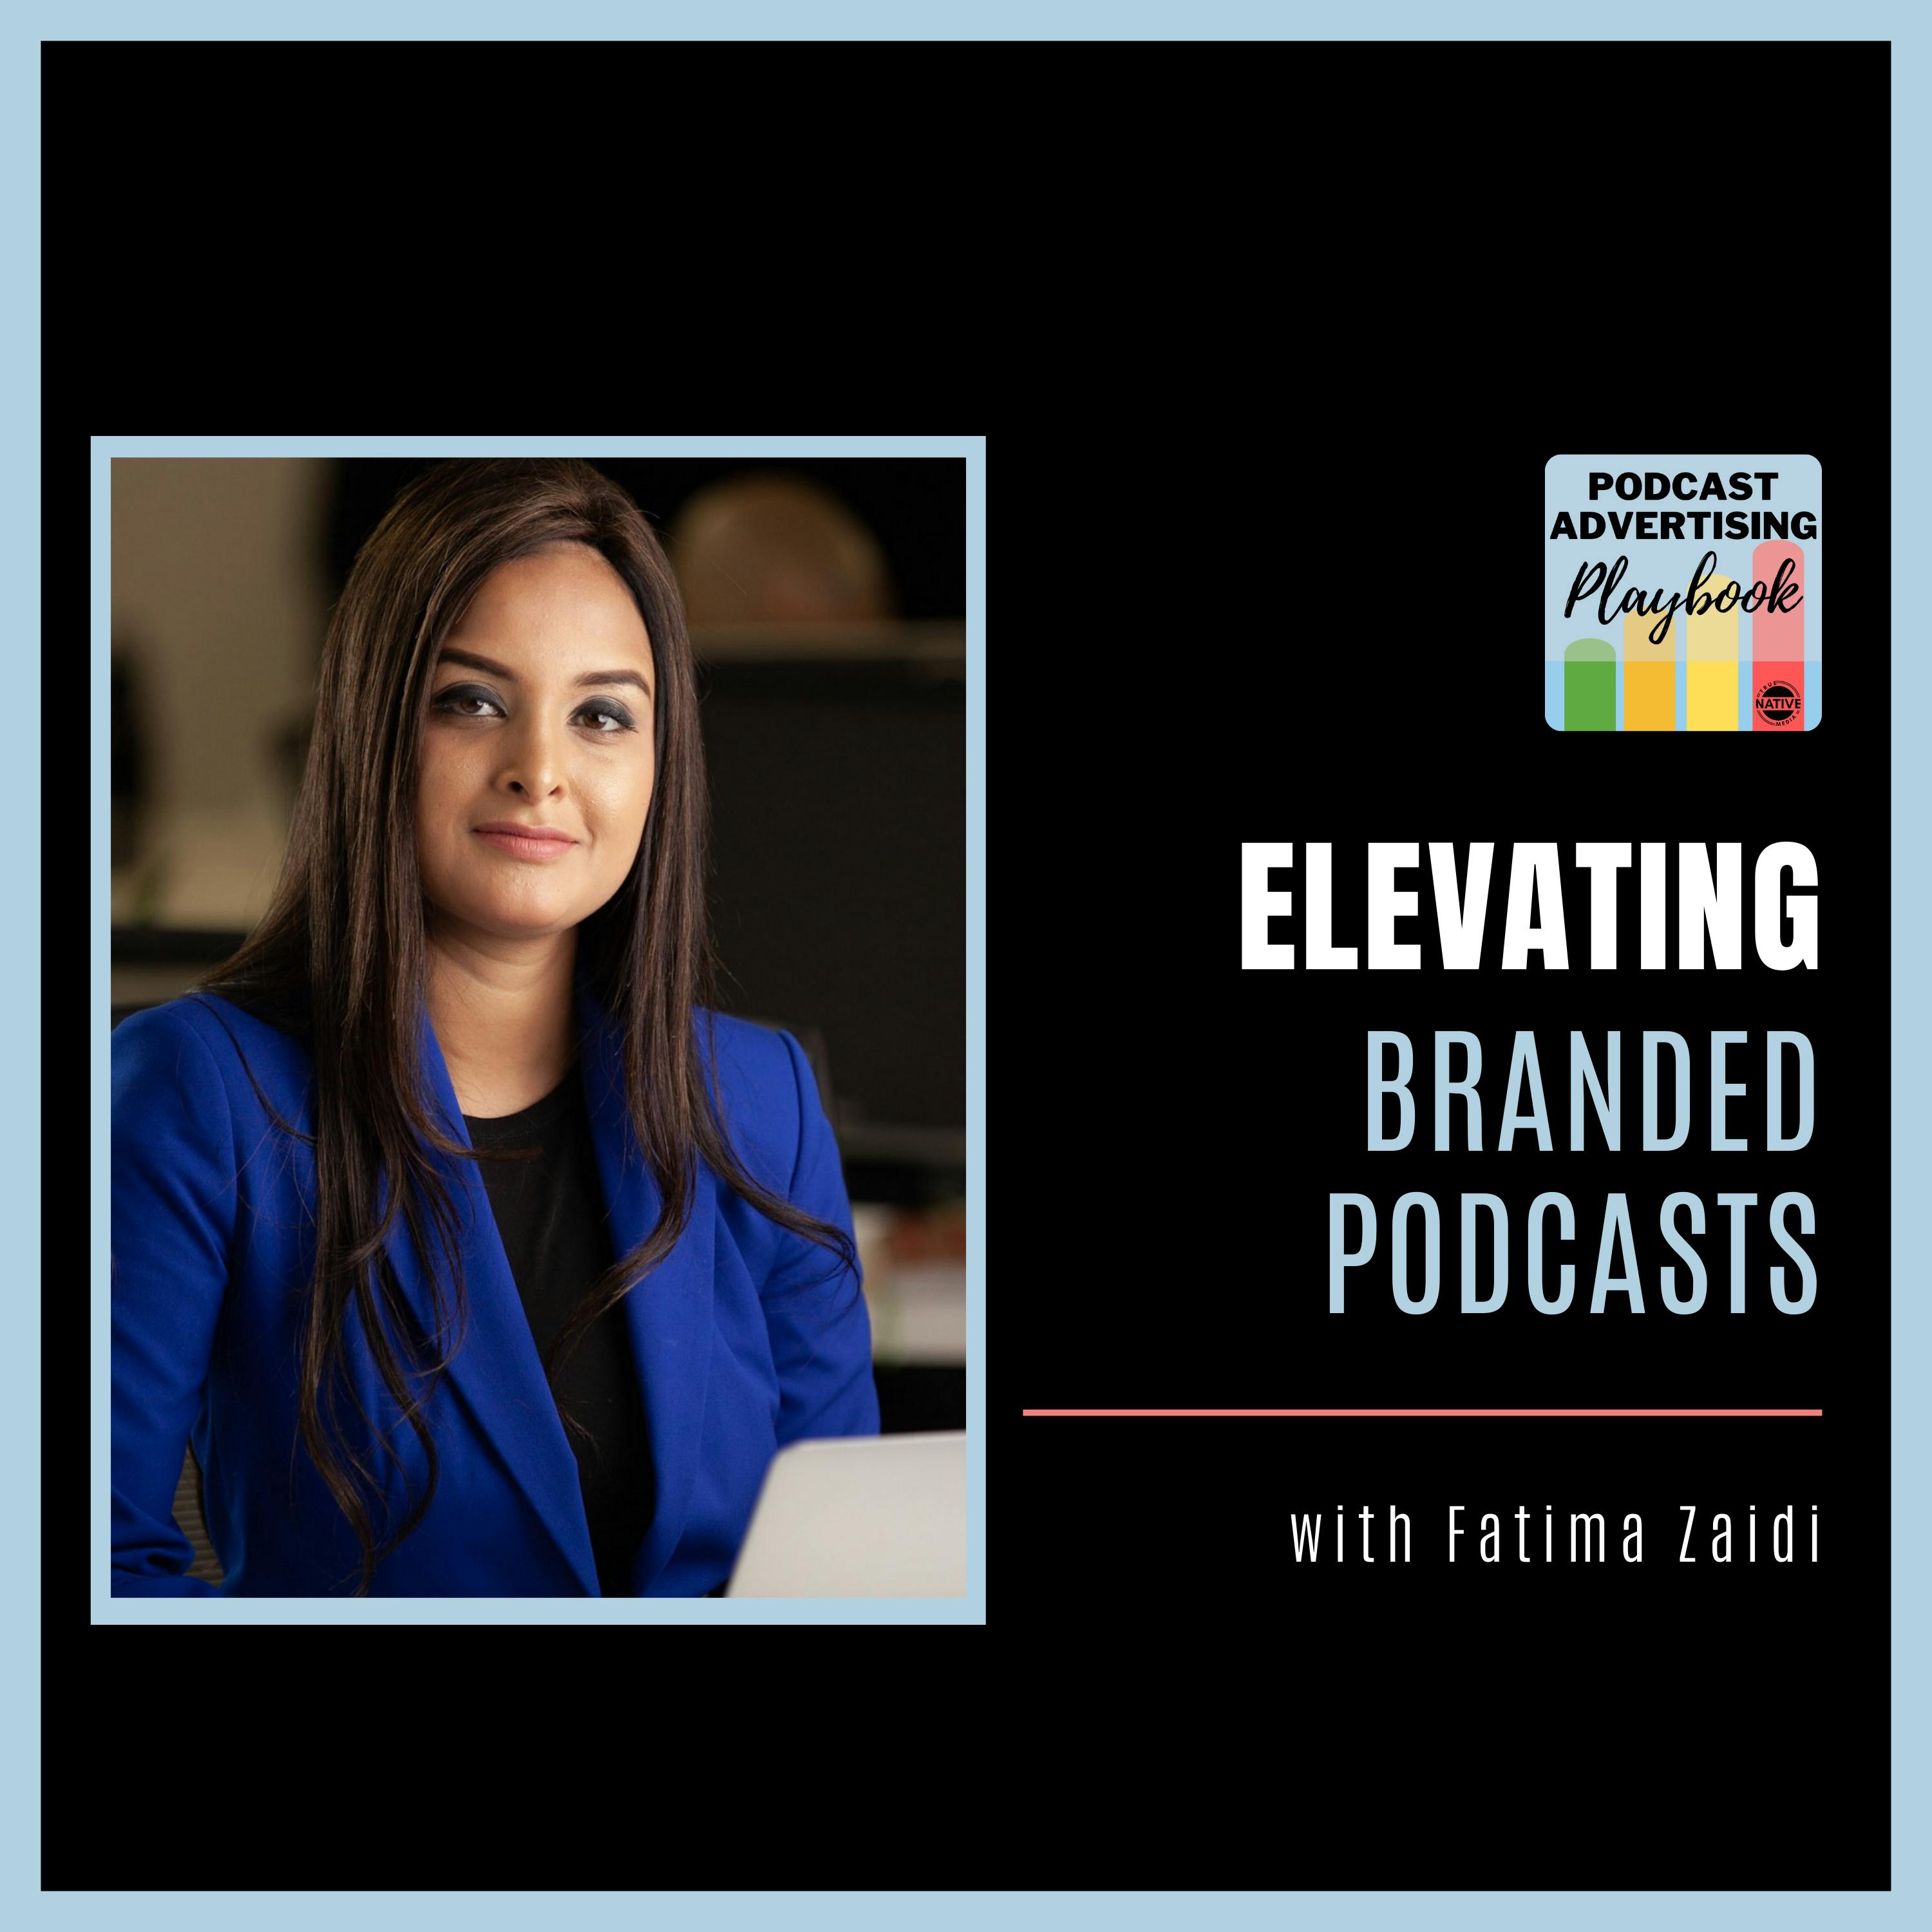 Fatima Zaidi Is Elevating Branded Podcasts Image